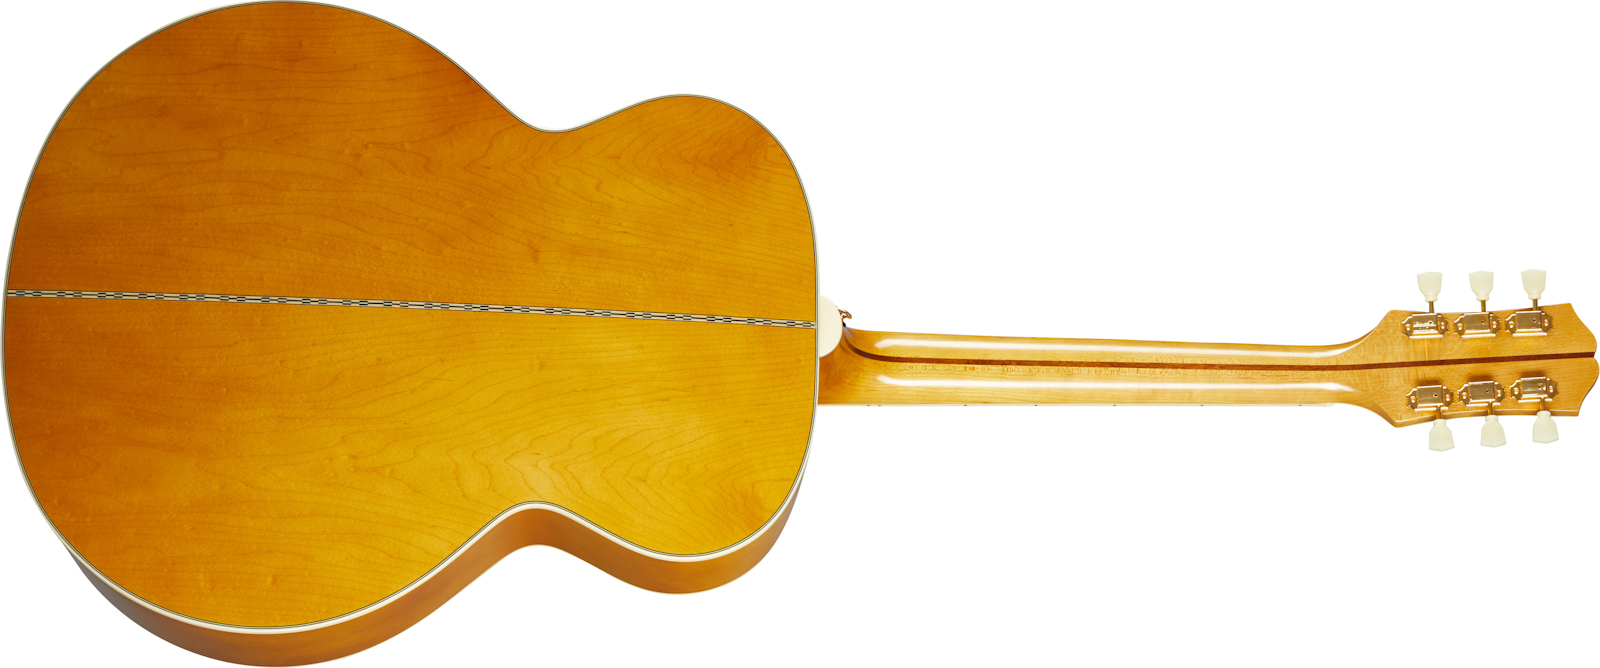 Epiphone J-200 Inspired By Gibson Jumbo Epicea Erable Lau - Aged Antique Natural - Elektroakustische Gitarre - Variation 1